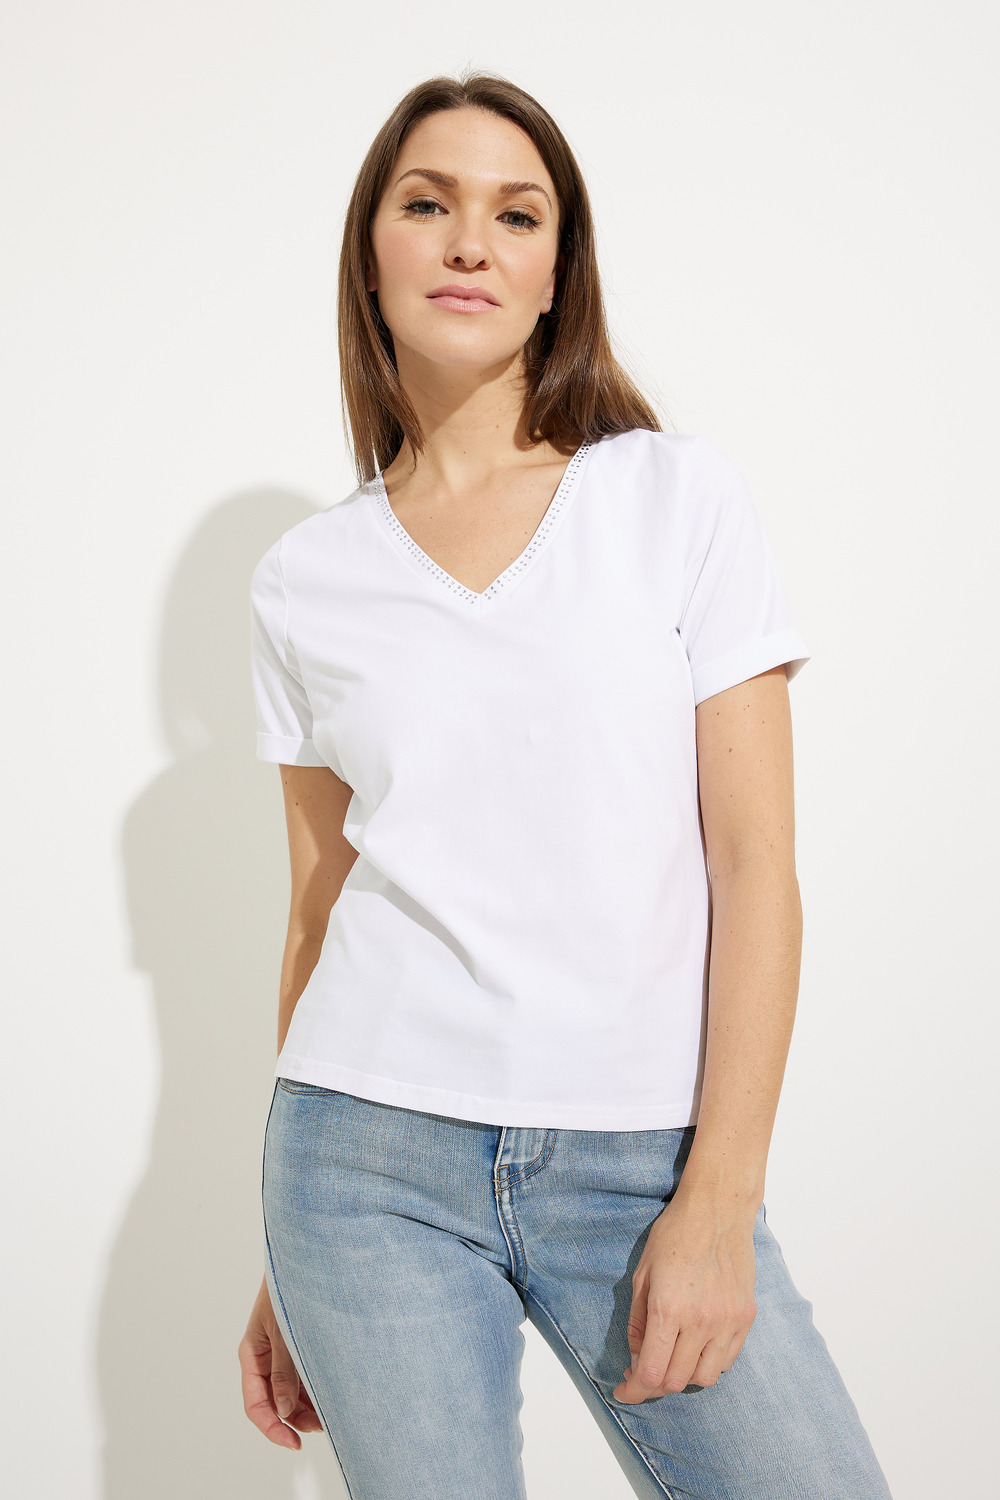 T-shirt uni avec col en v modèle A41125. Blanc